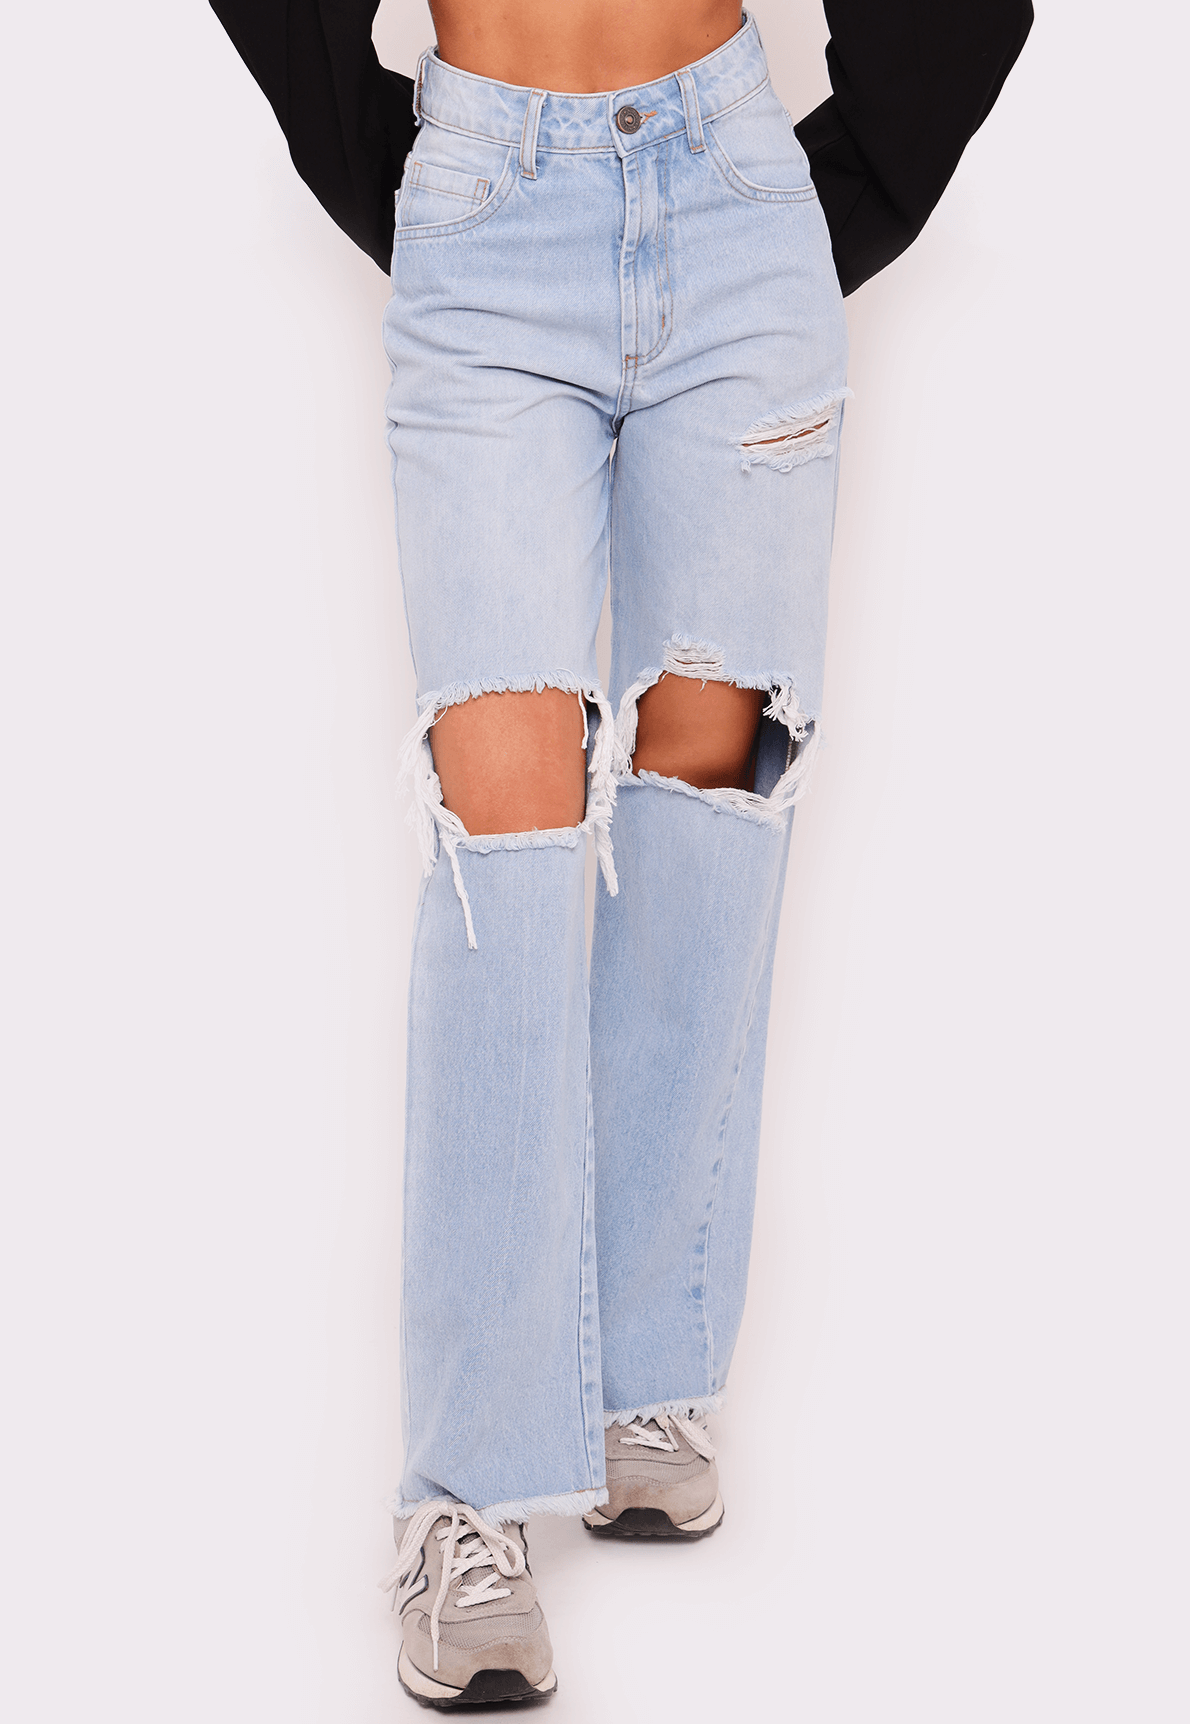 38420-calca-jeans-retro-azul-mundo-lolita-02